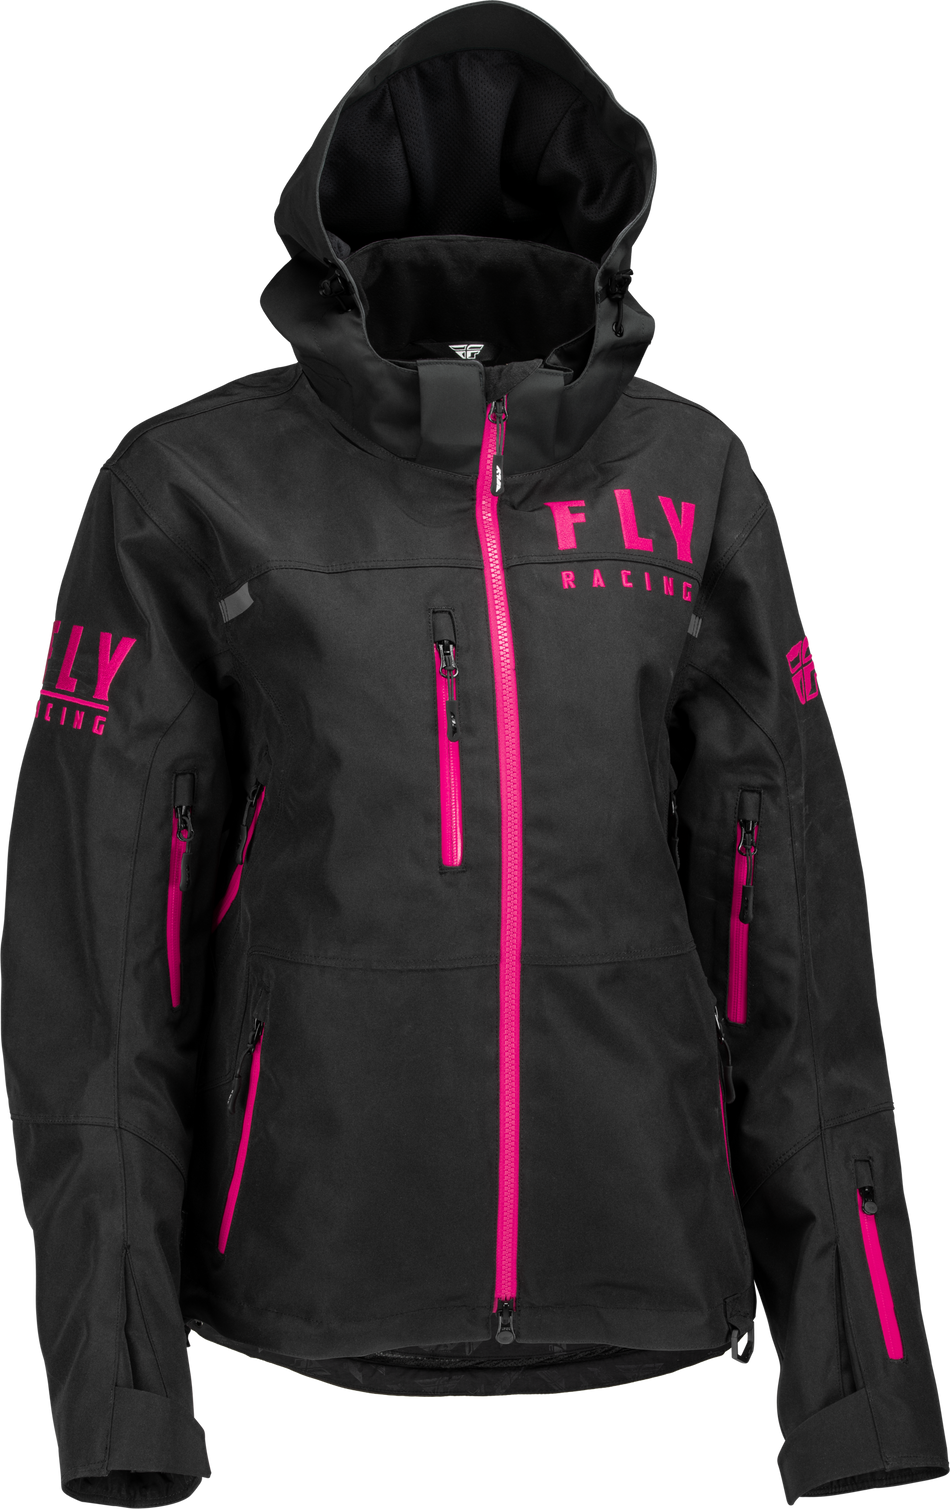 FLY RACING Women's Carbon Jacket Black/Pink Xl 470-4502X